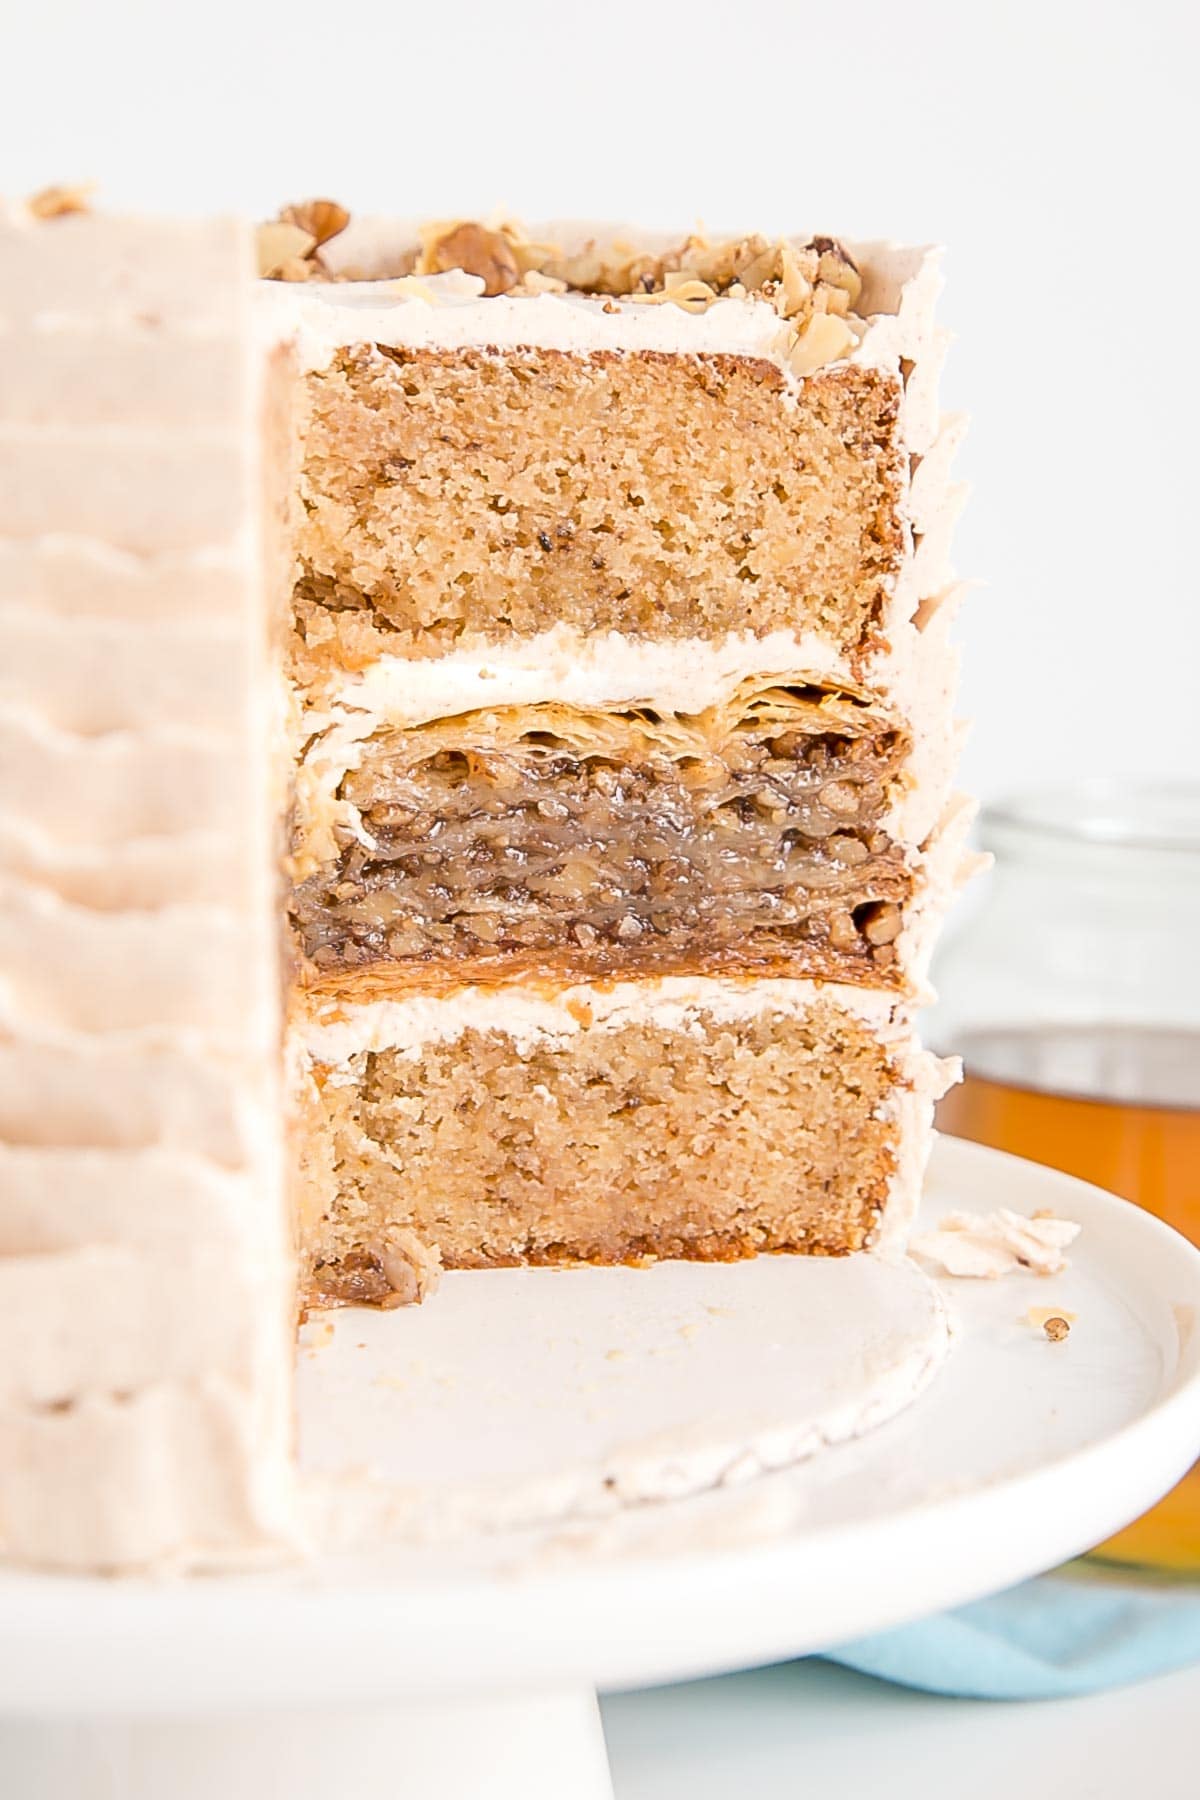 Inside shot of a baklava cake with honey walnut cake layers.